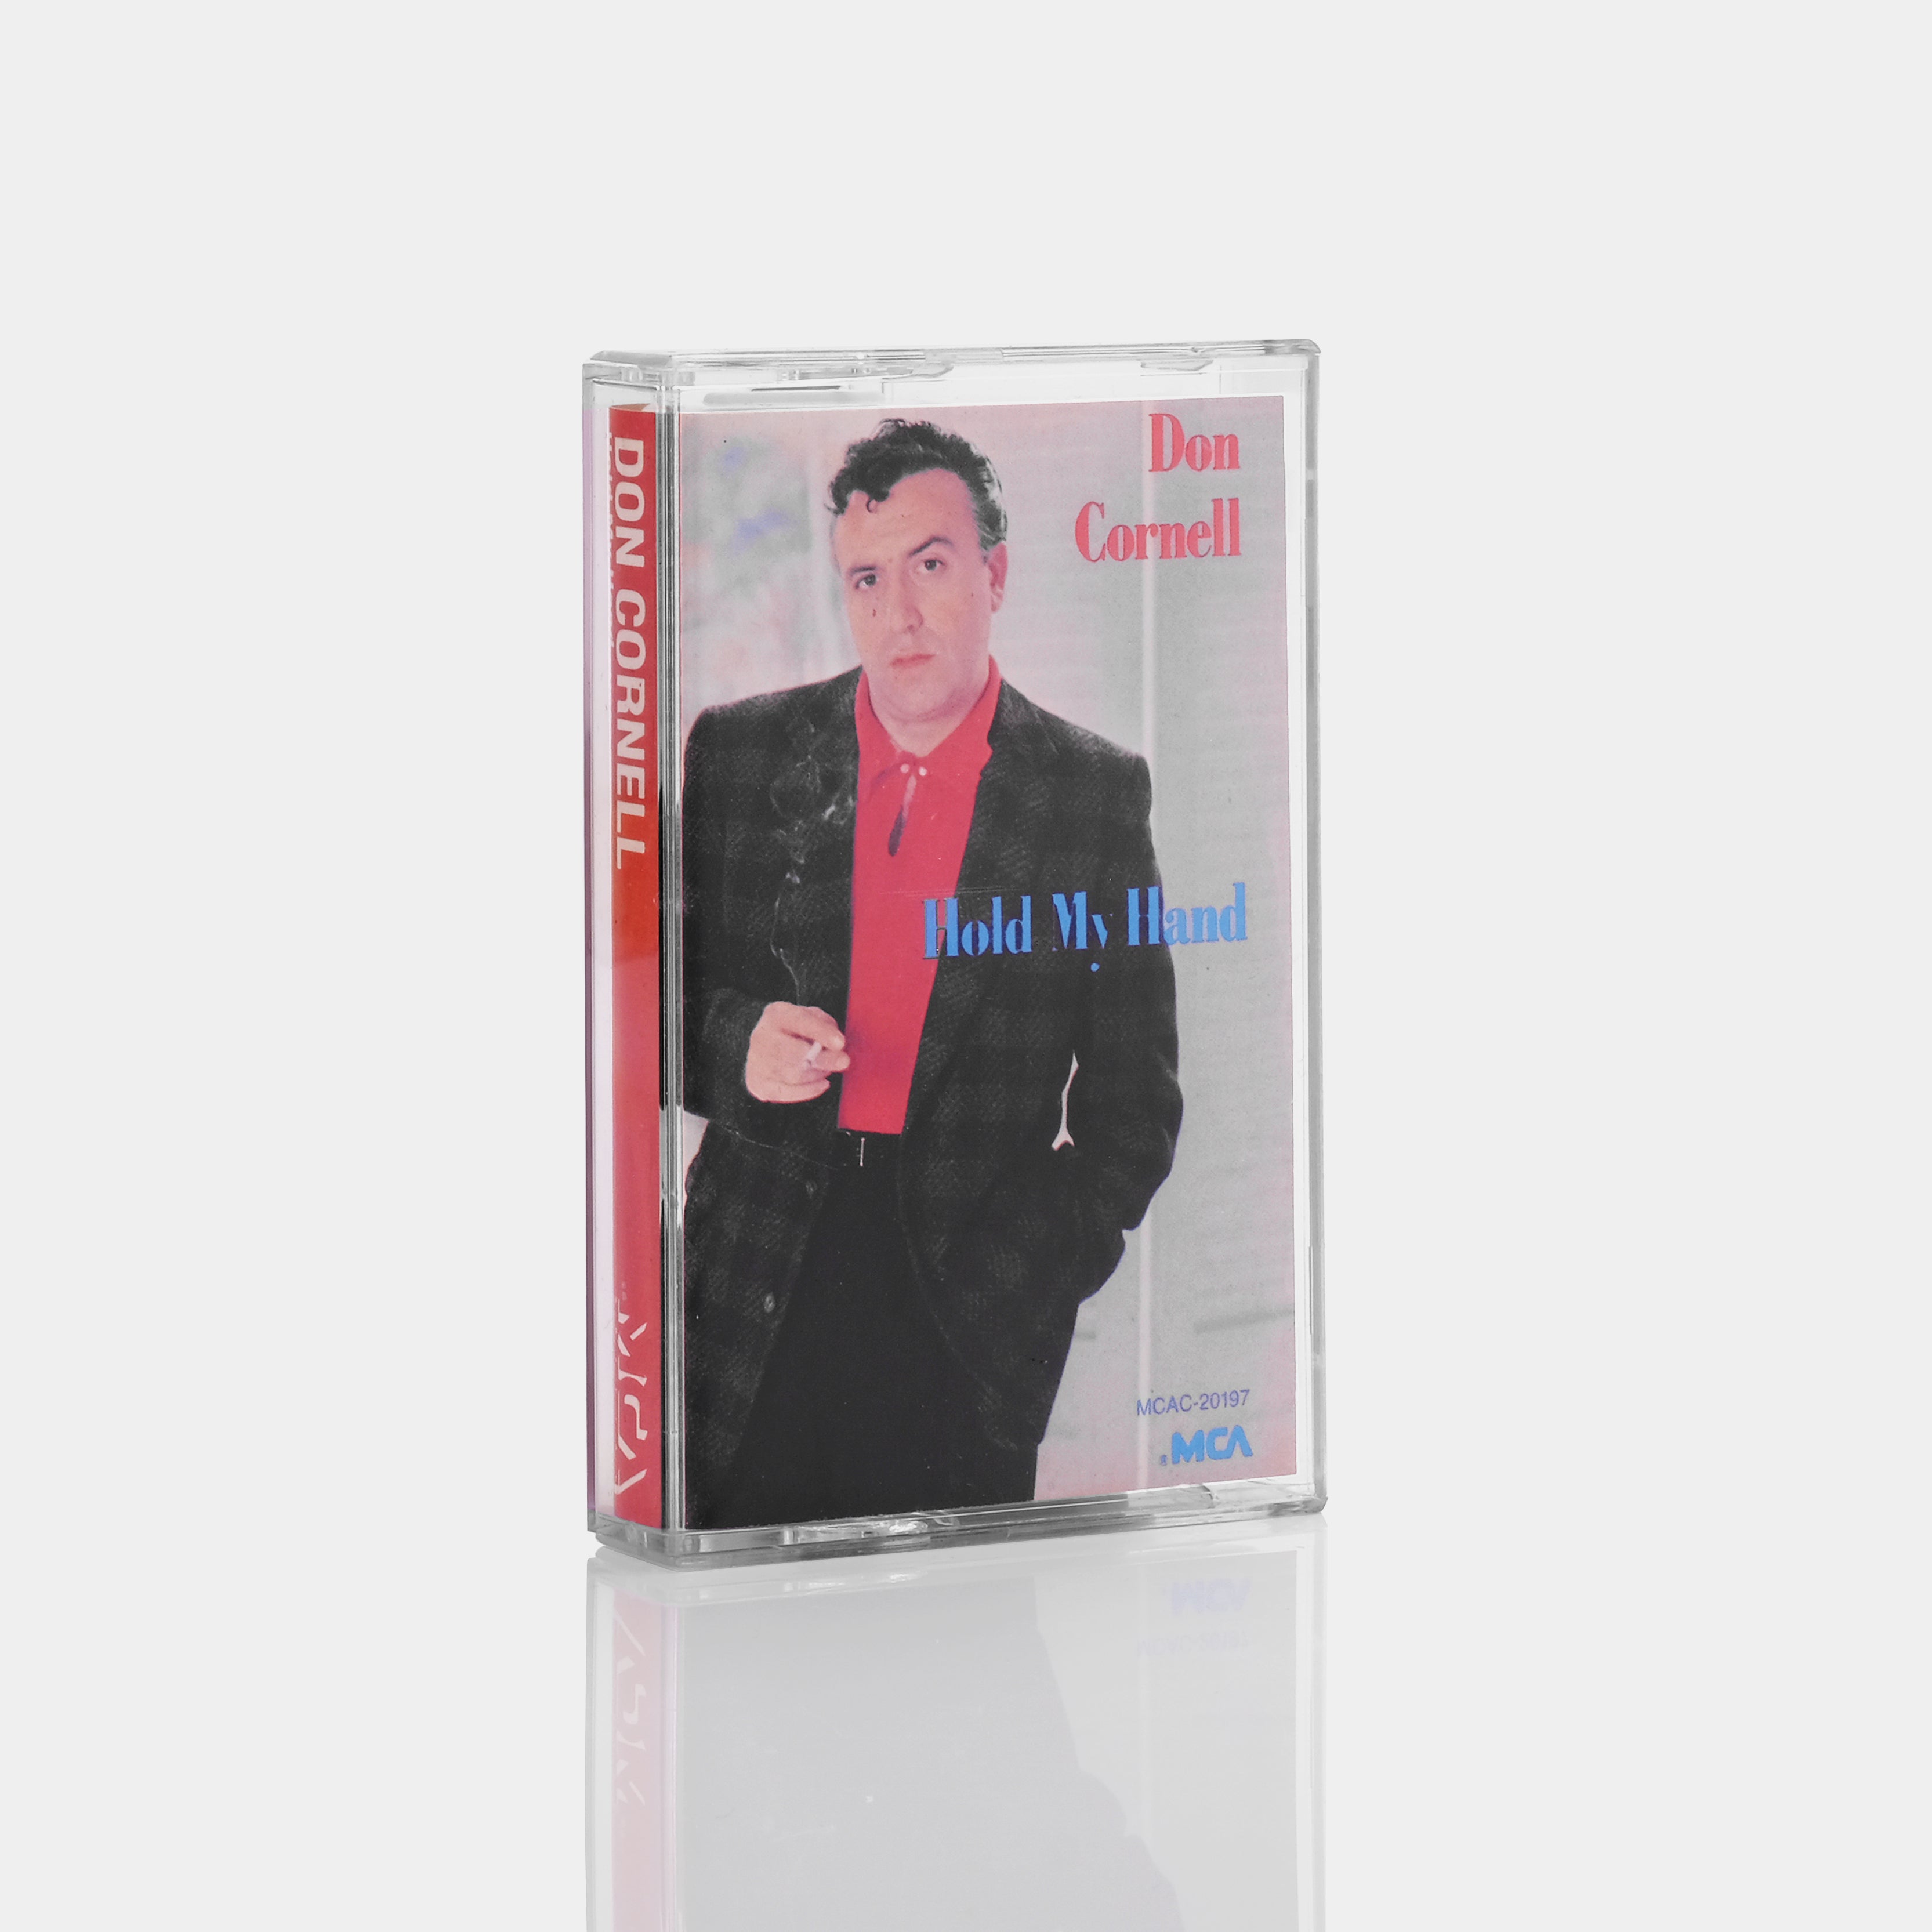 Don Cornell - Hold My Hand Cassette Tape